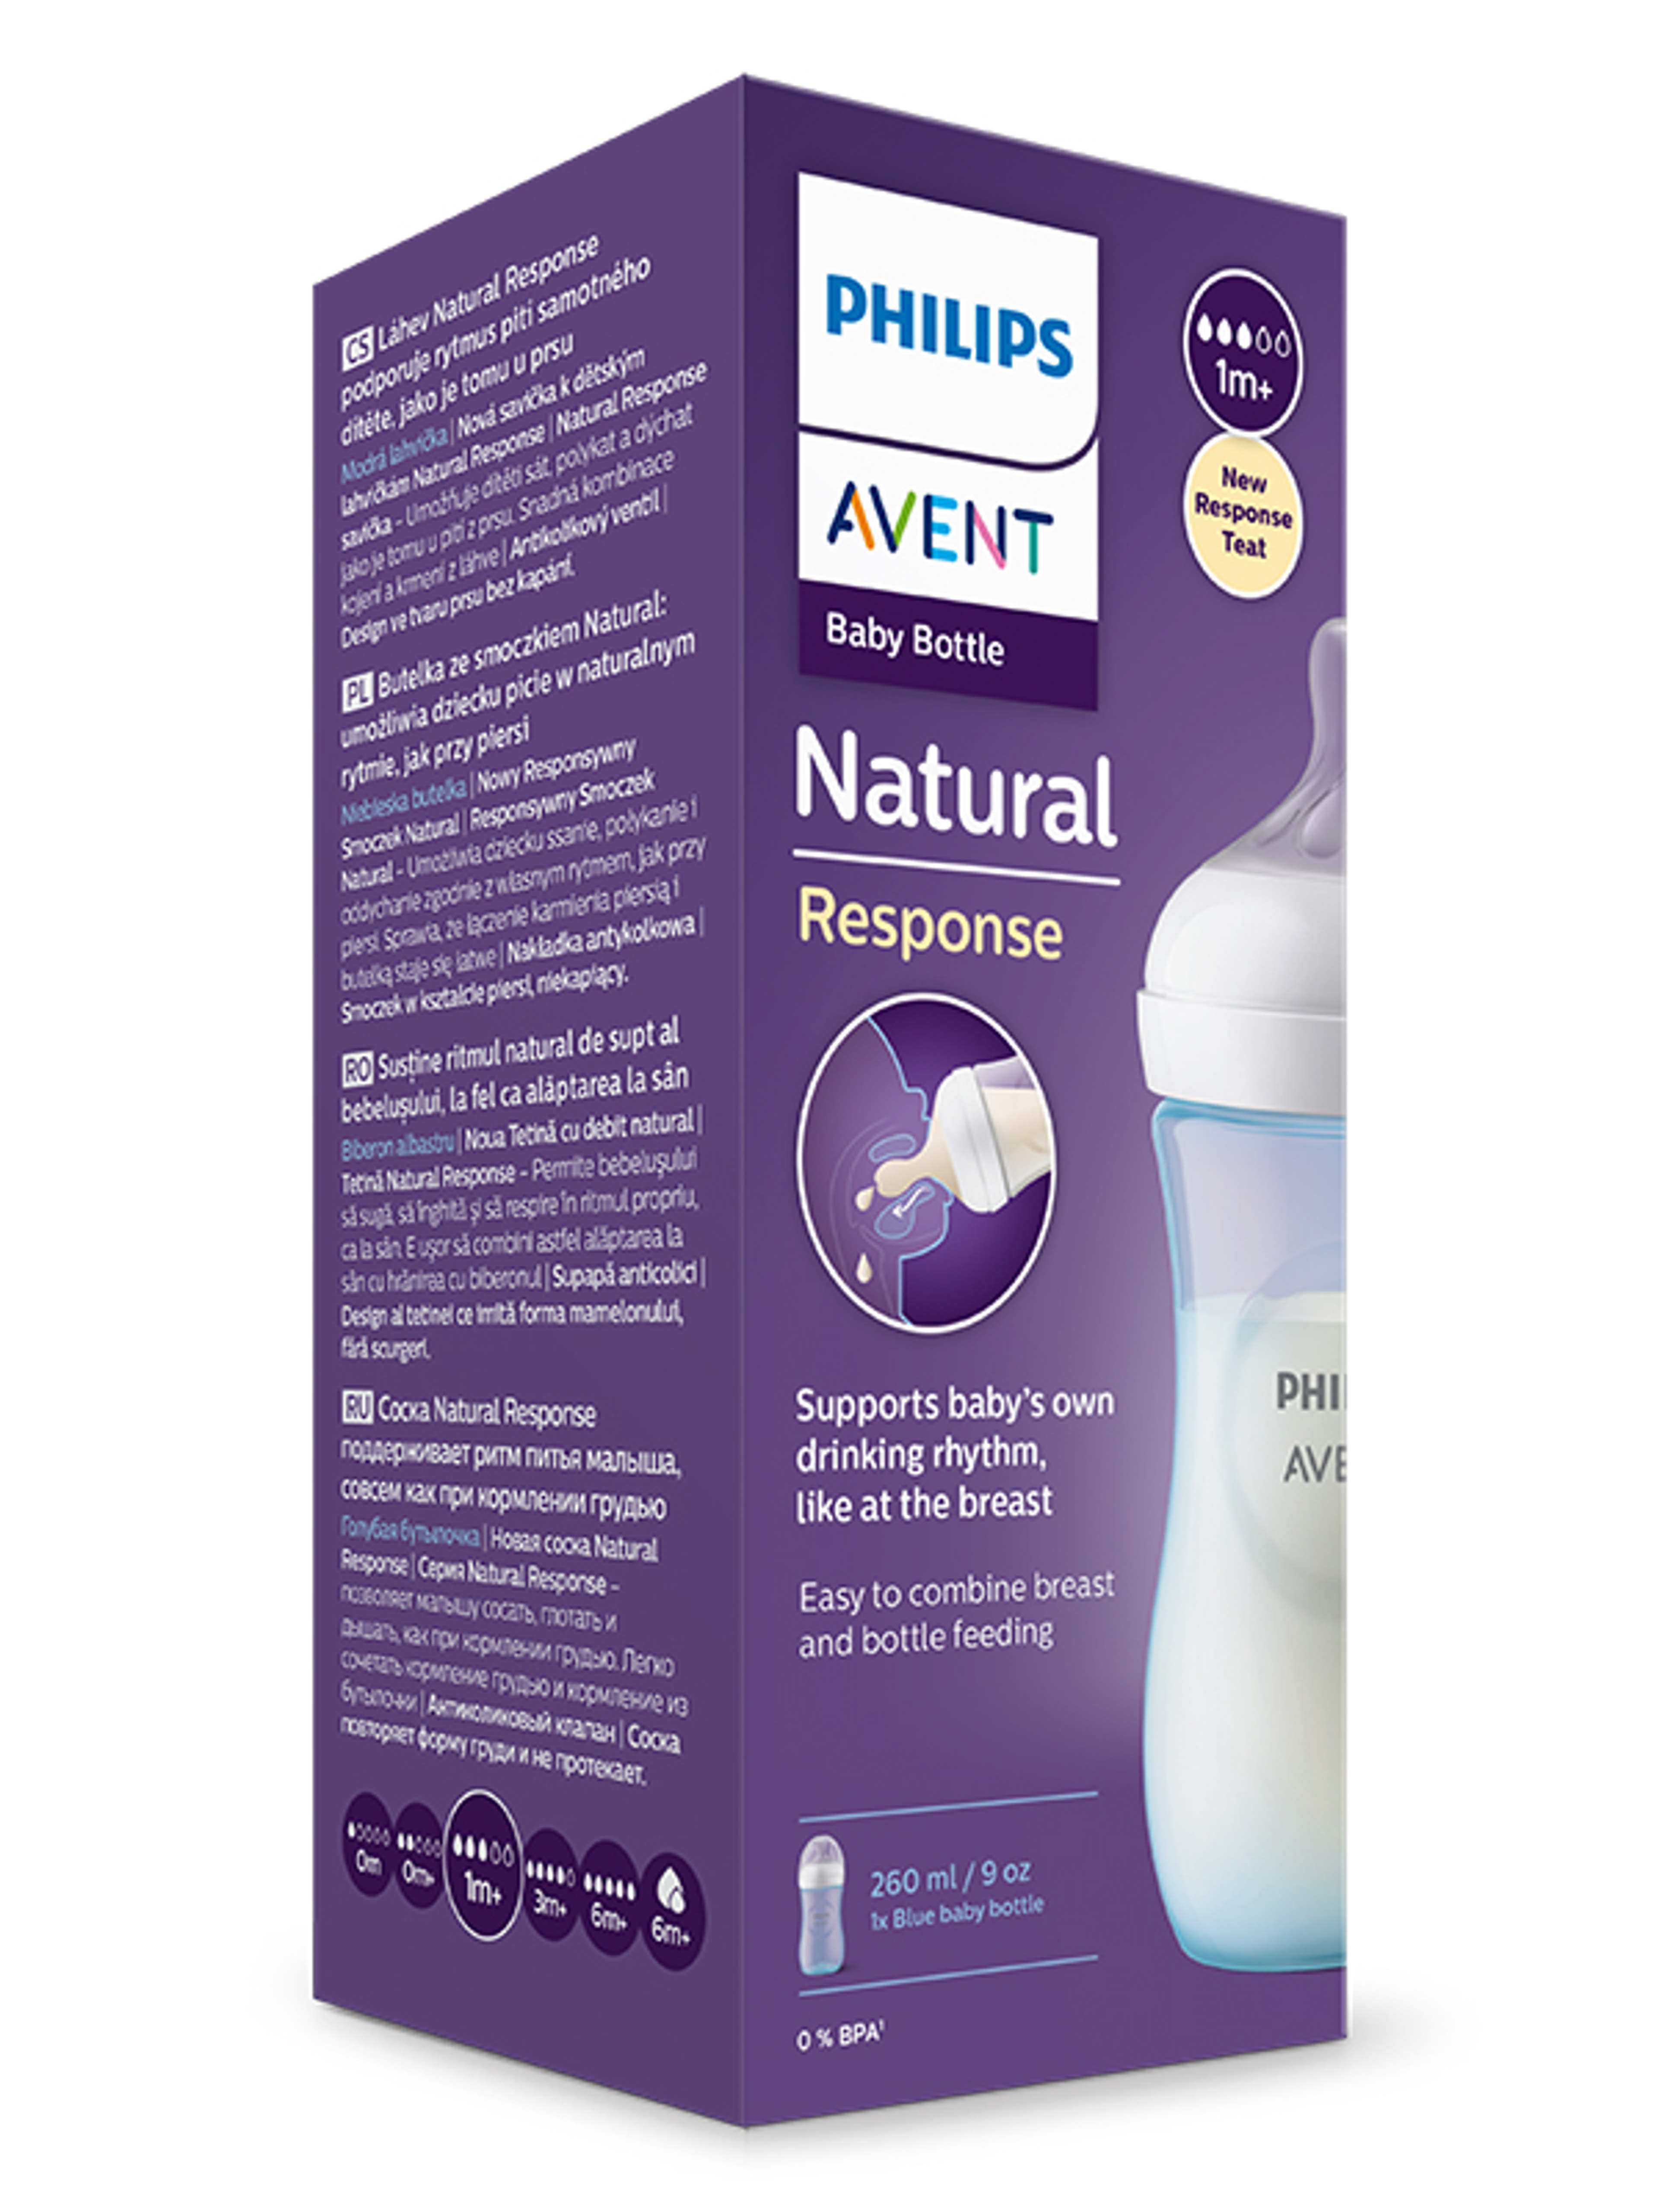 Philips Avent Natural Response cumisüveg 1 hónapos kortól 260 ml kék - 1 db-3